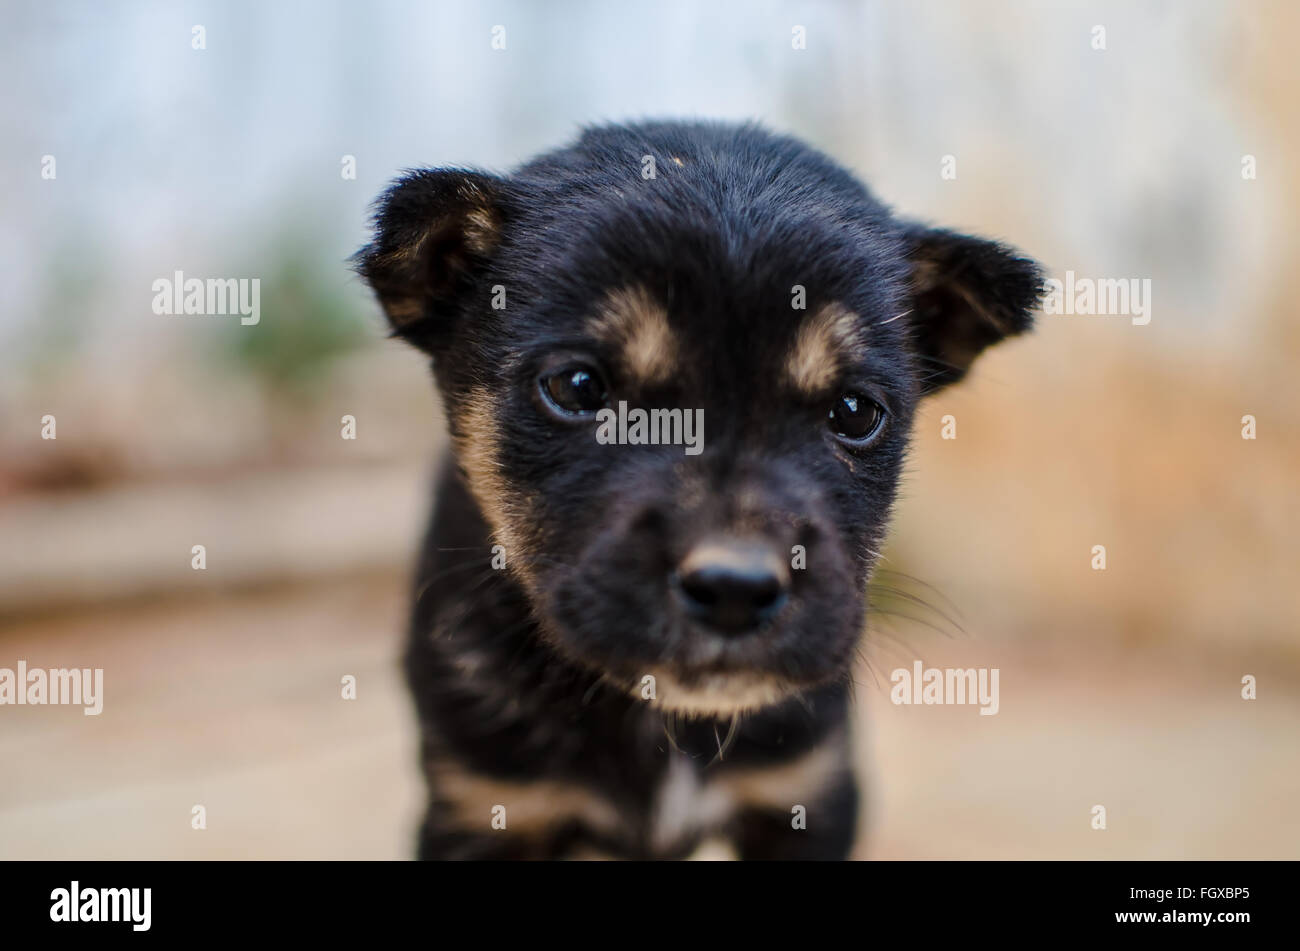 A cute sad puppy Stock Photo